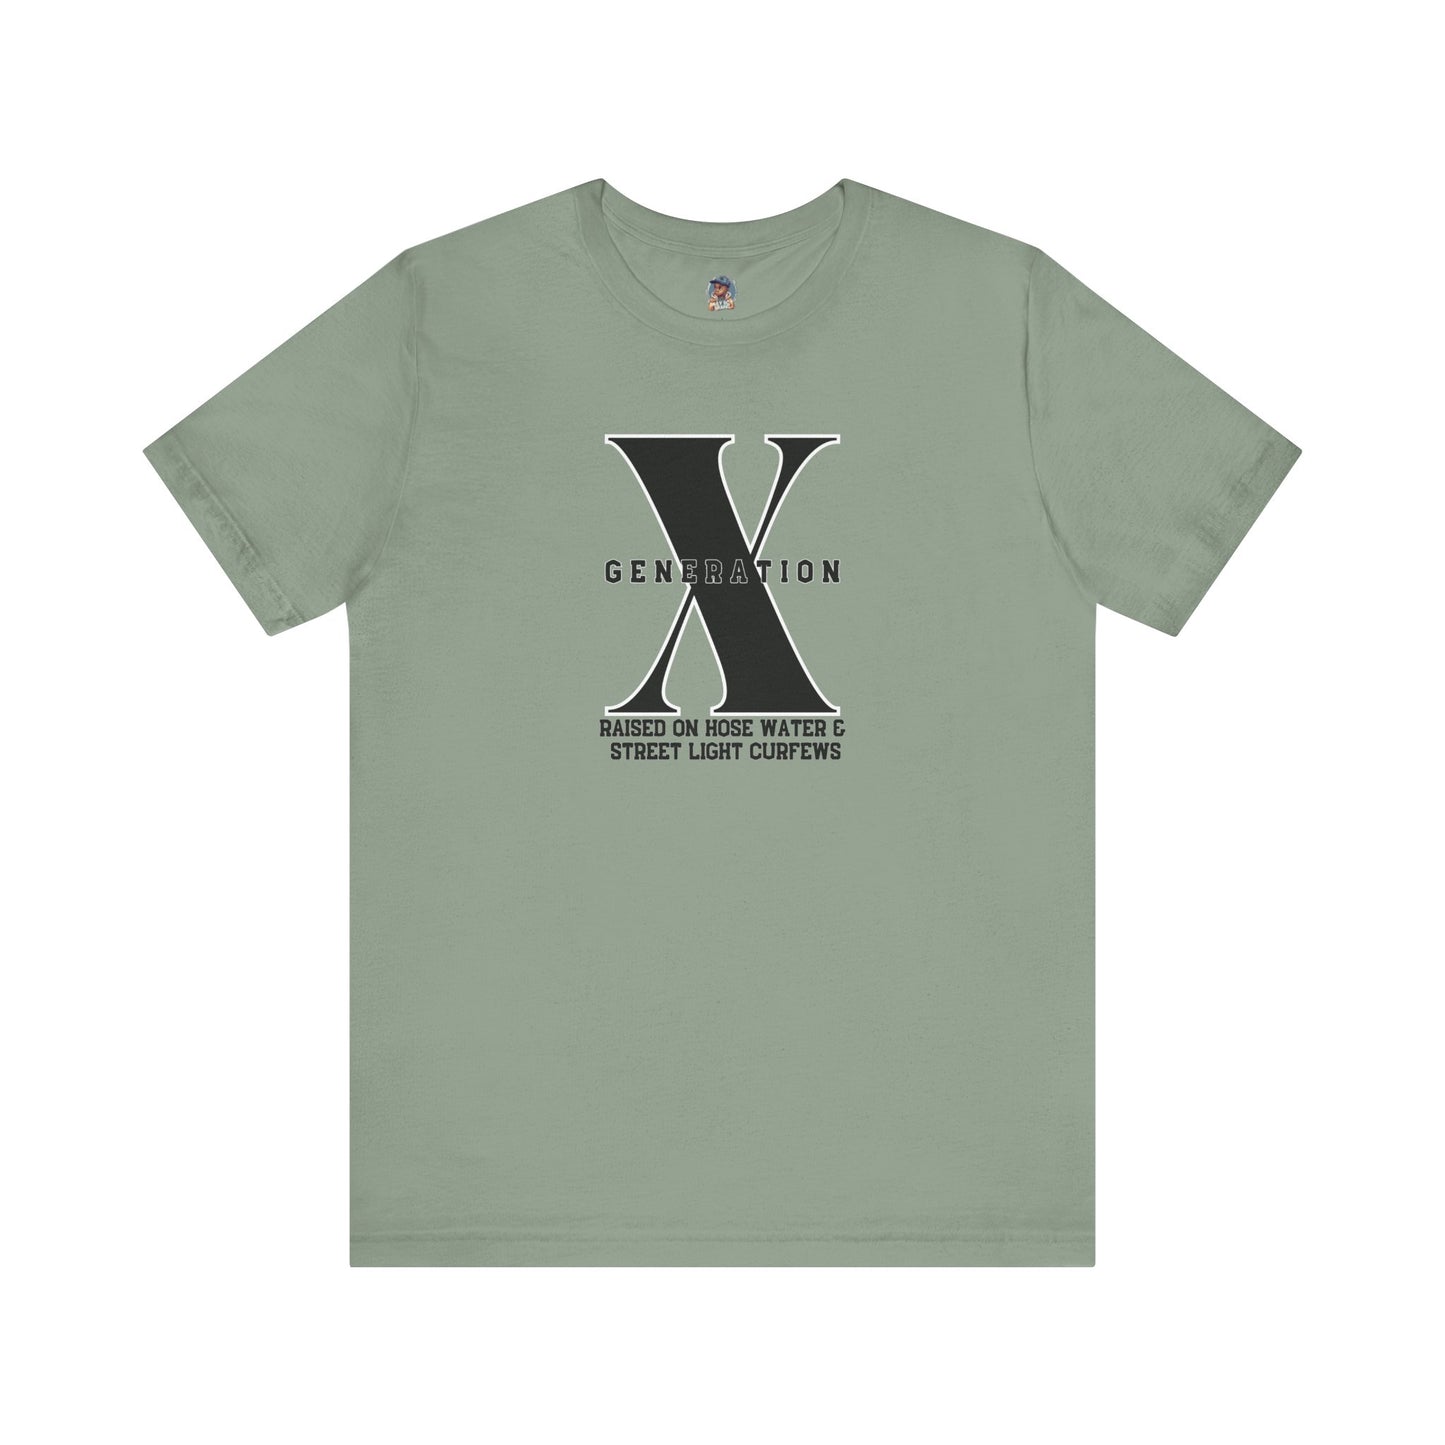 "Generation X T-shirt"